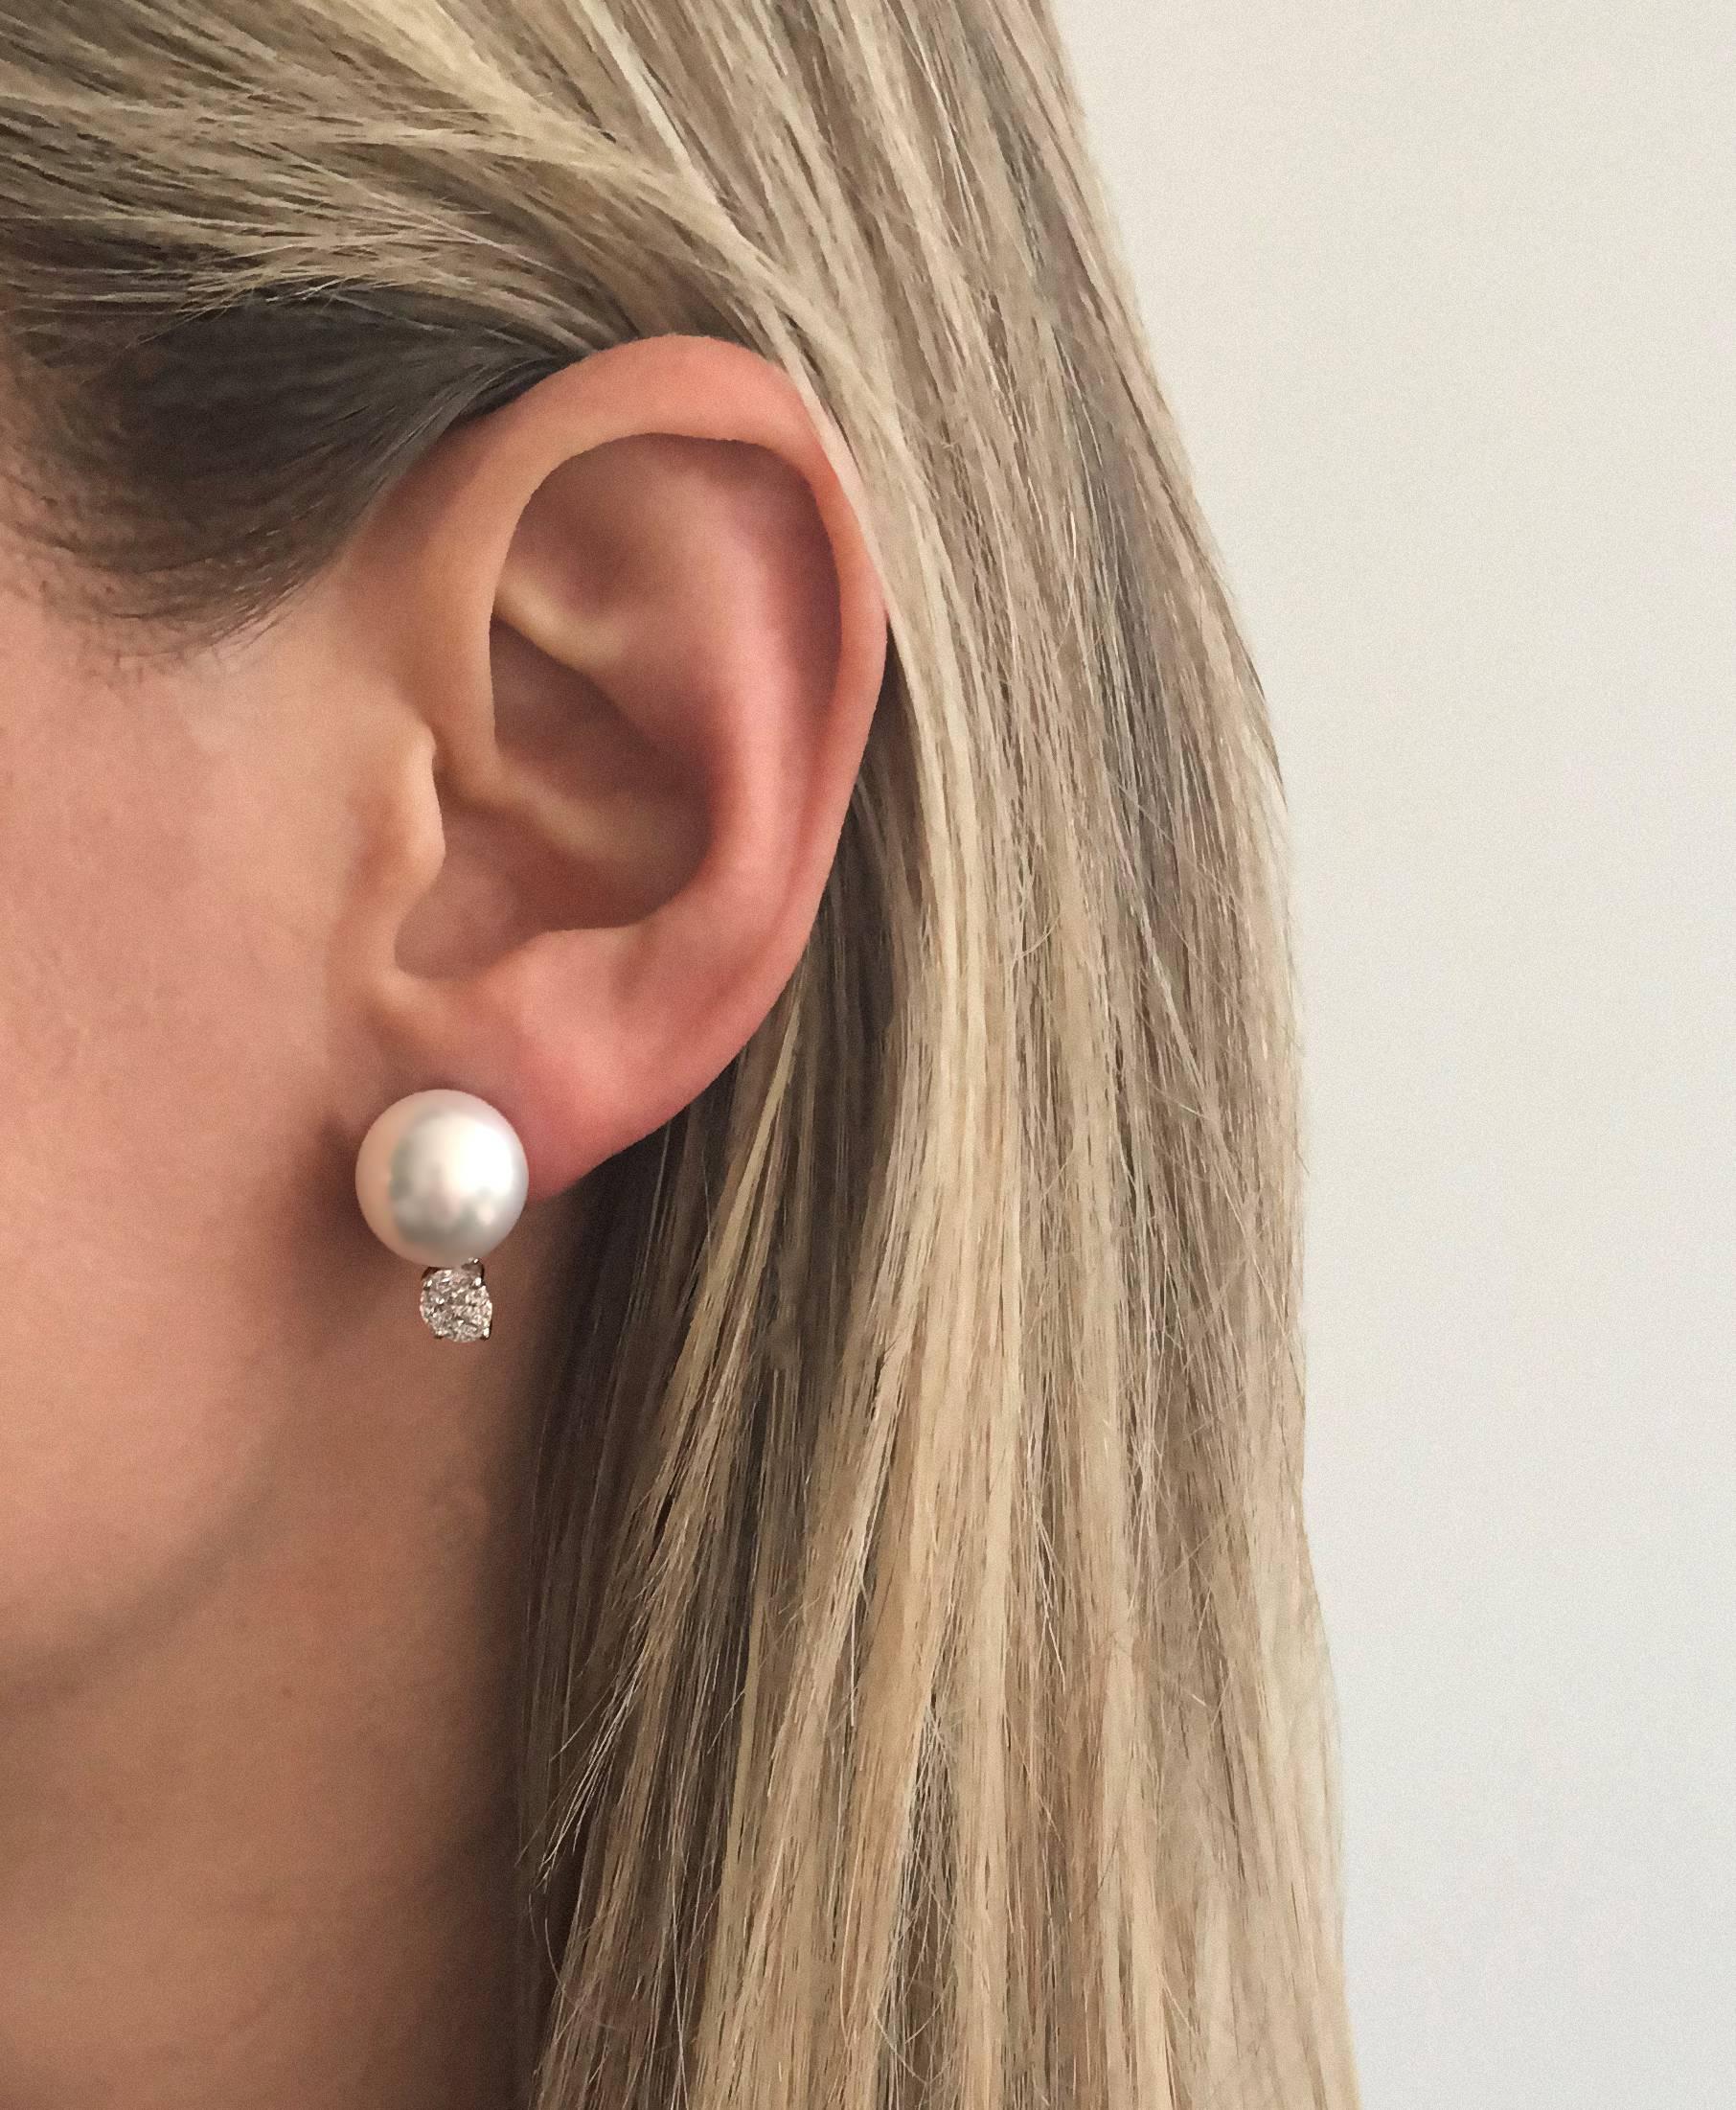 pearl and diamond earrings on ear